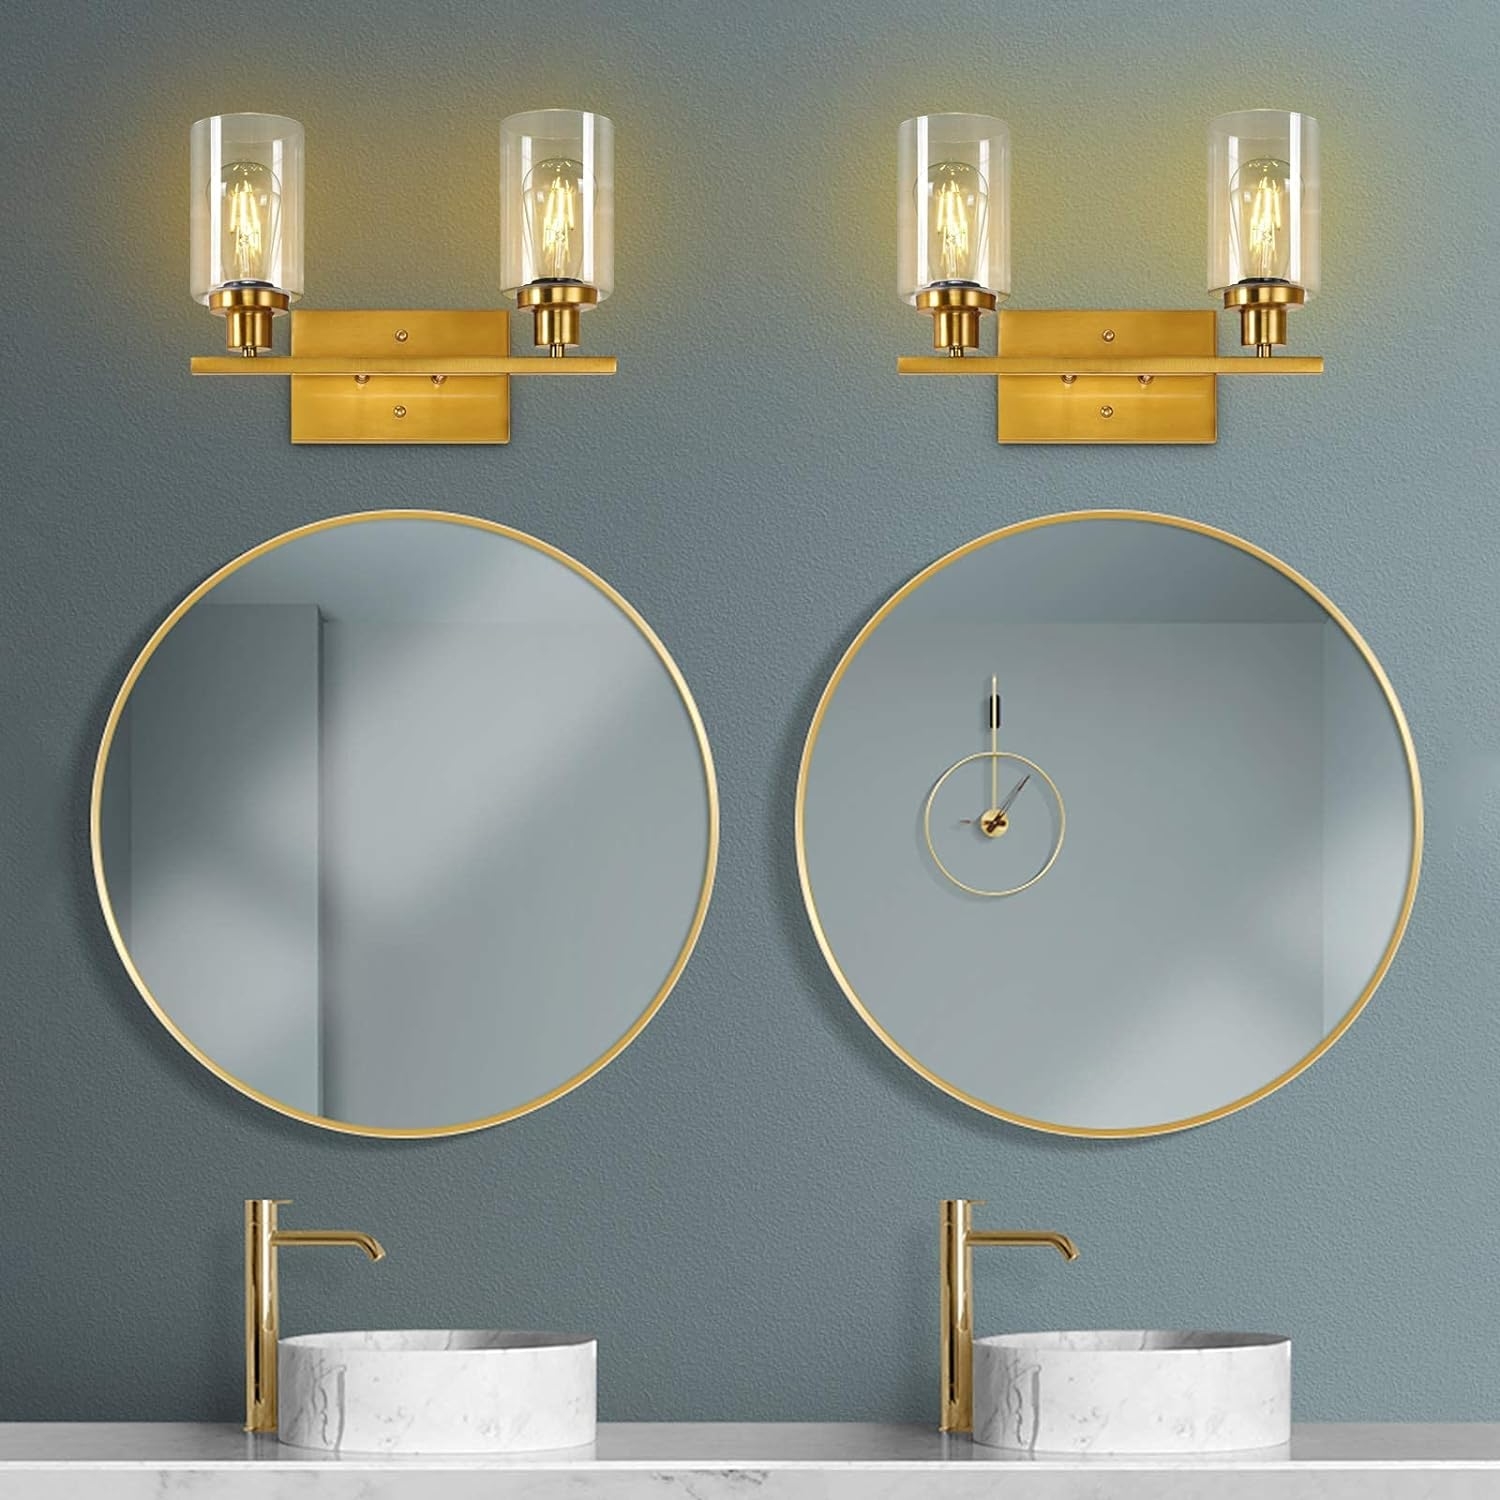 SGLfarmty Bathroom Vanity 2 Lights,Rustic Bathroom Vanity Brushed Brass Lights, Wall Sconce Bathroom Lighting with Glass Lamp Shade